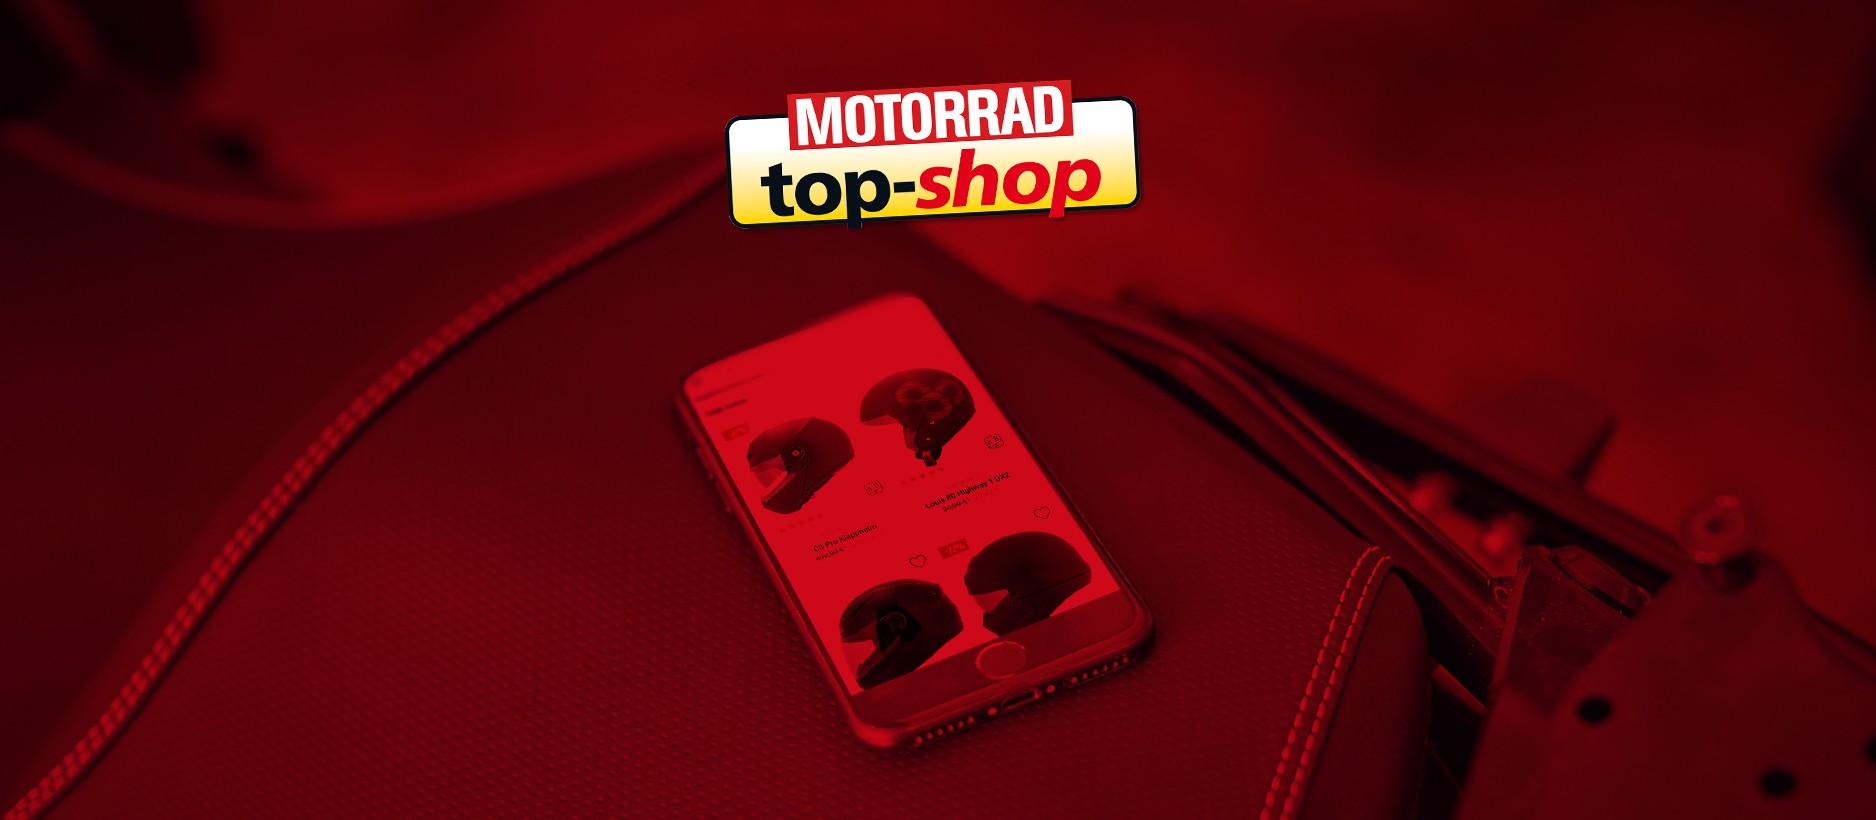 THE LOUIS ONLINE SHOP IS TEST-WINNER! – Named top shop of 2020 by MOTORRAD magazine